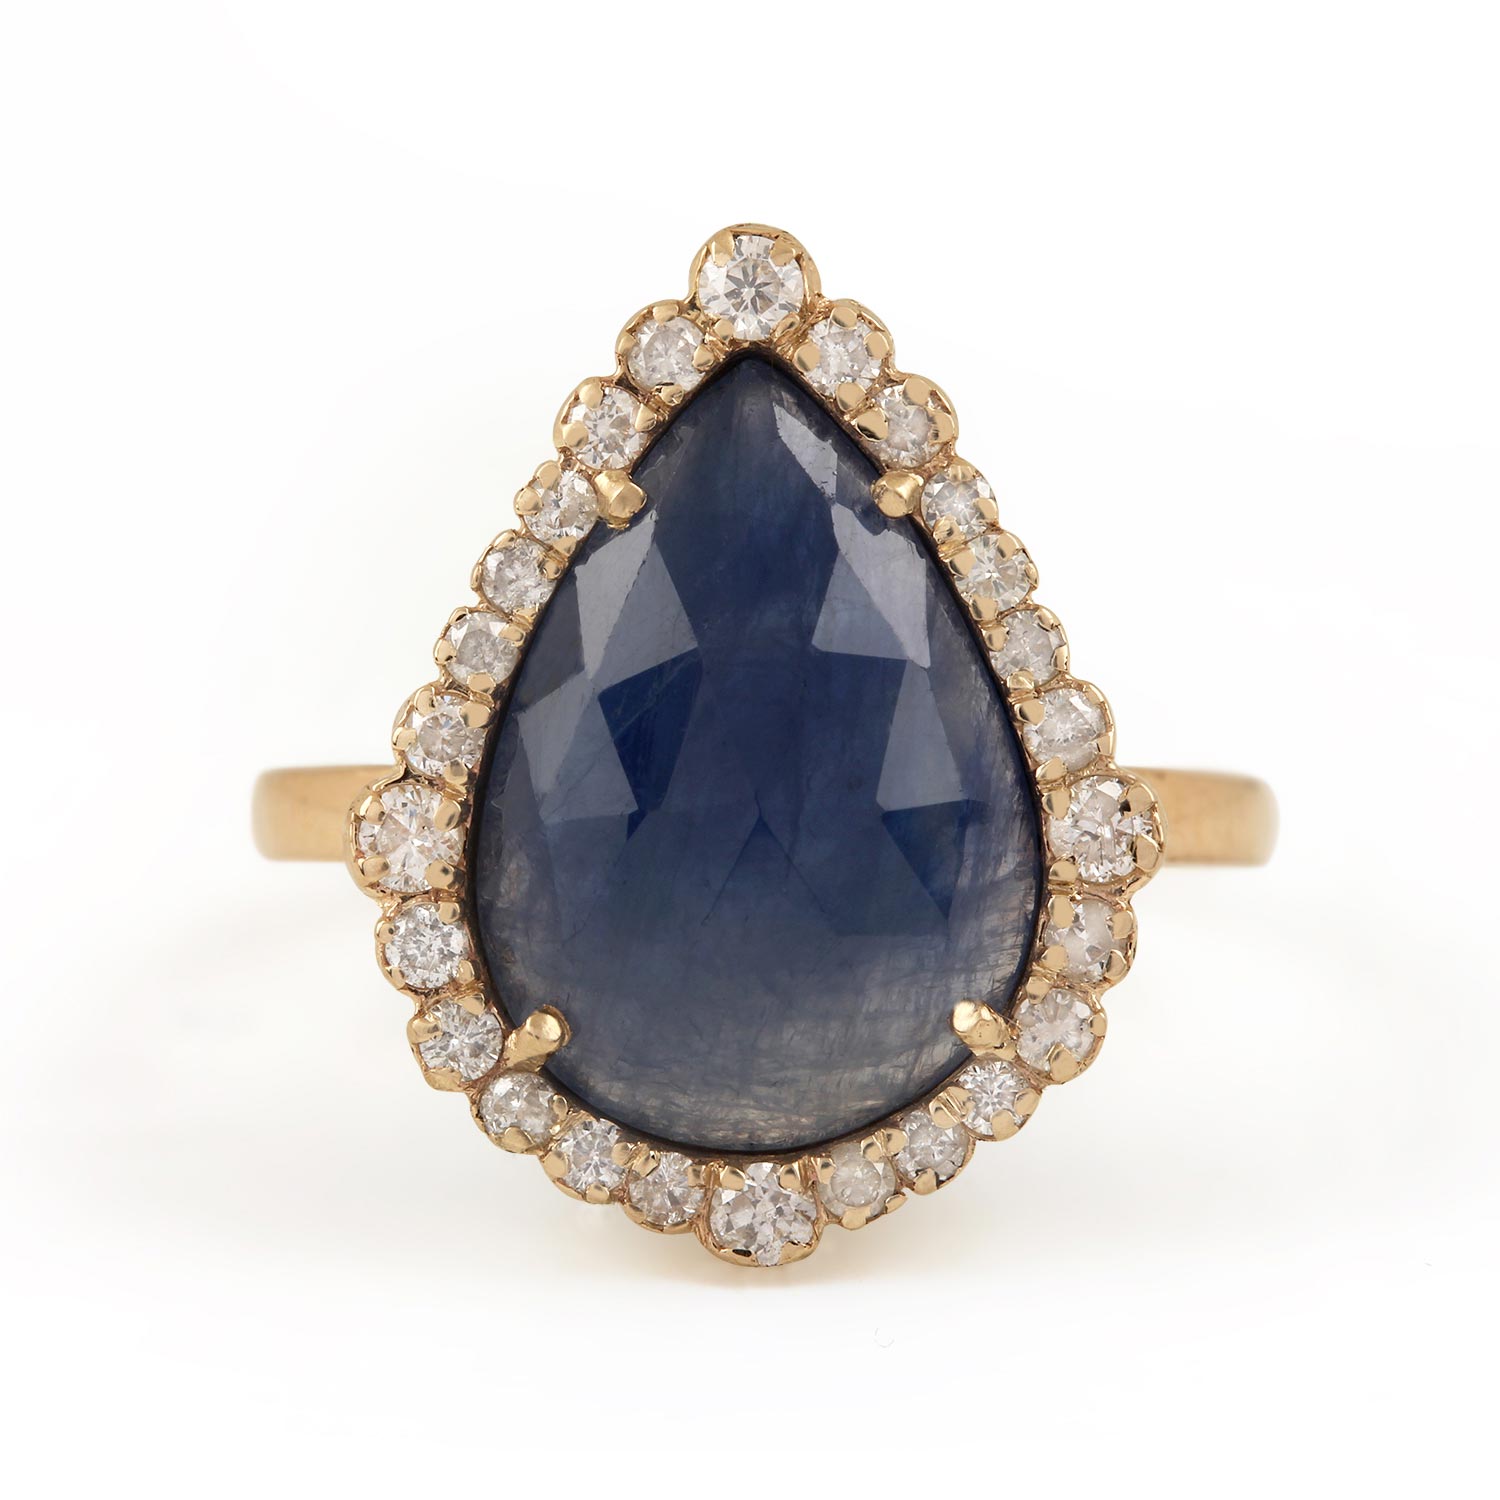 14K Solid Gold Pave Diamond Ring Blue Sapphire Gemstone Jewelry